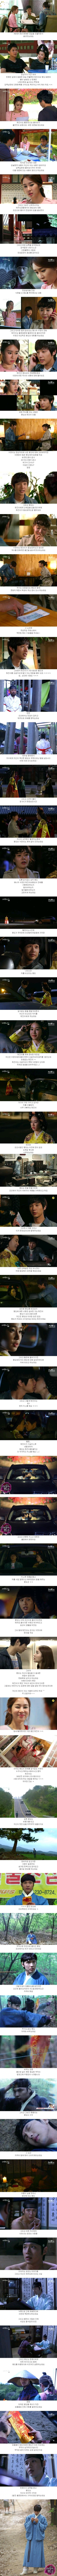 episode 8 captures for the Korean drama 'Queen In-hyun's Man'